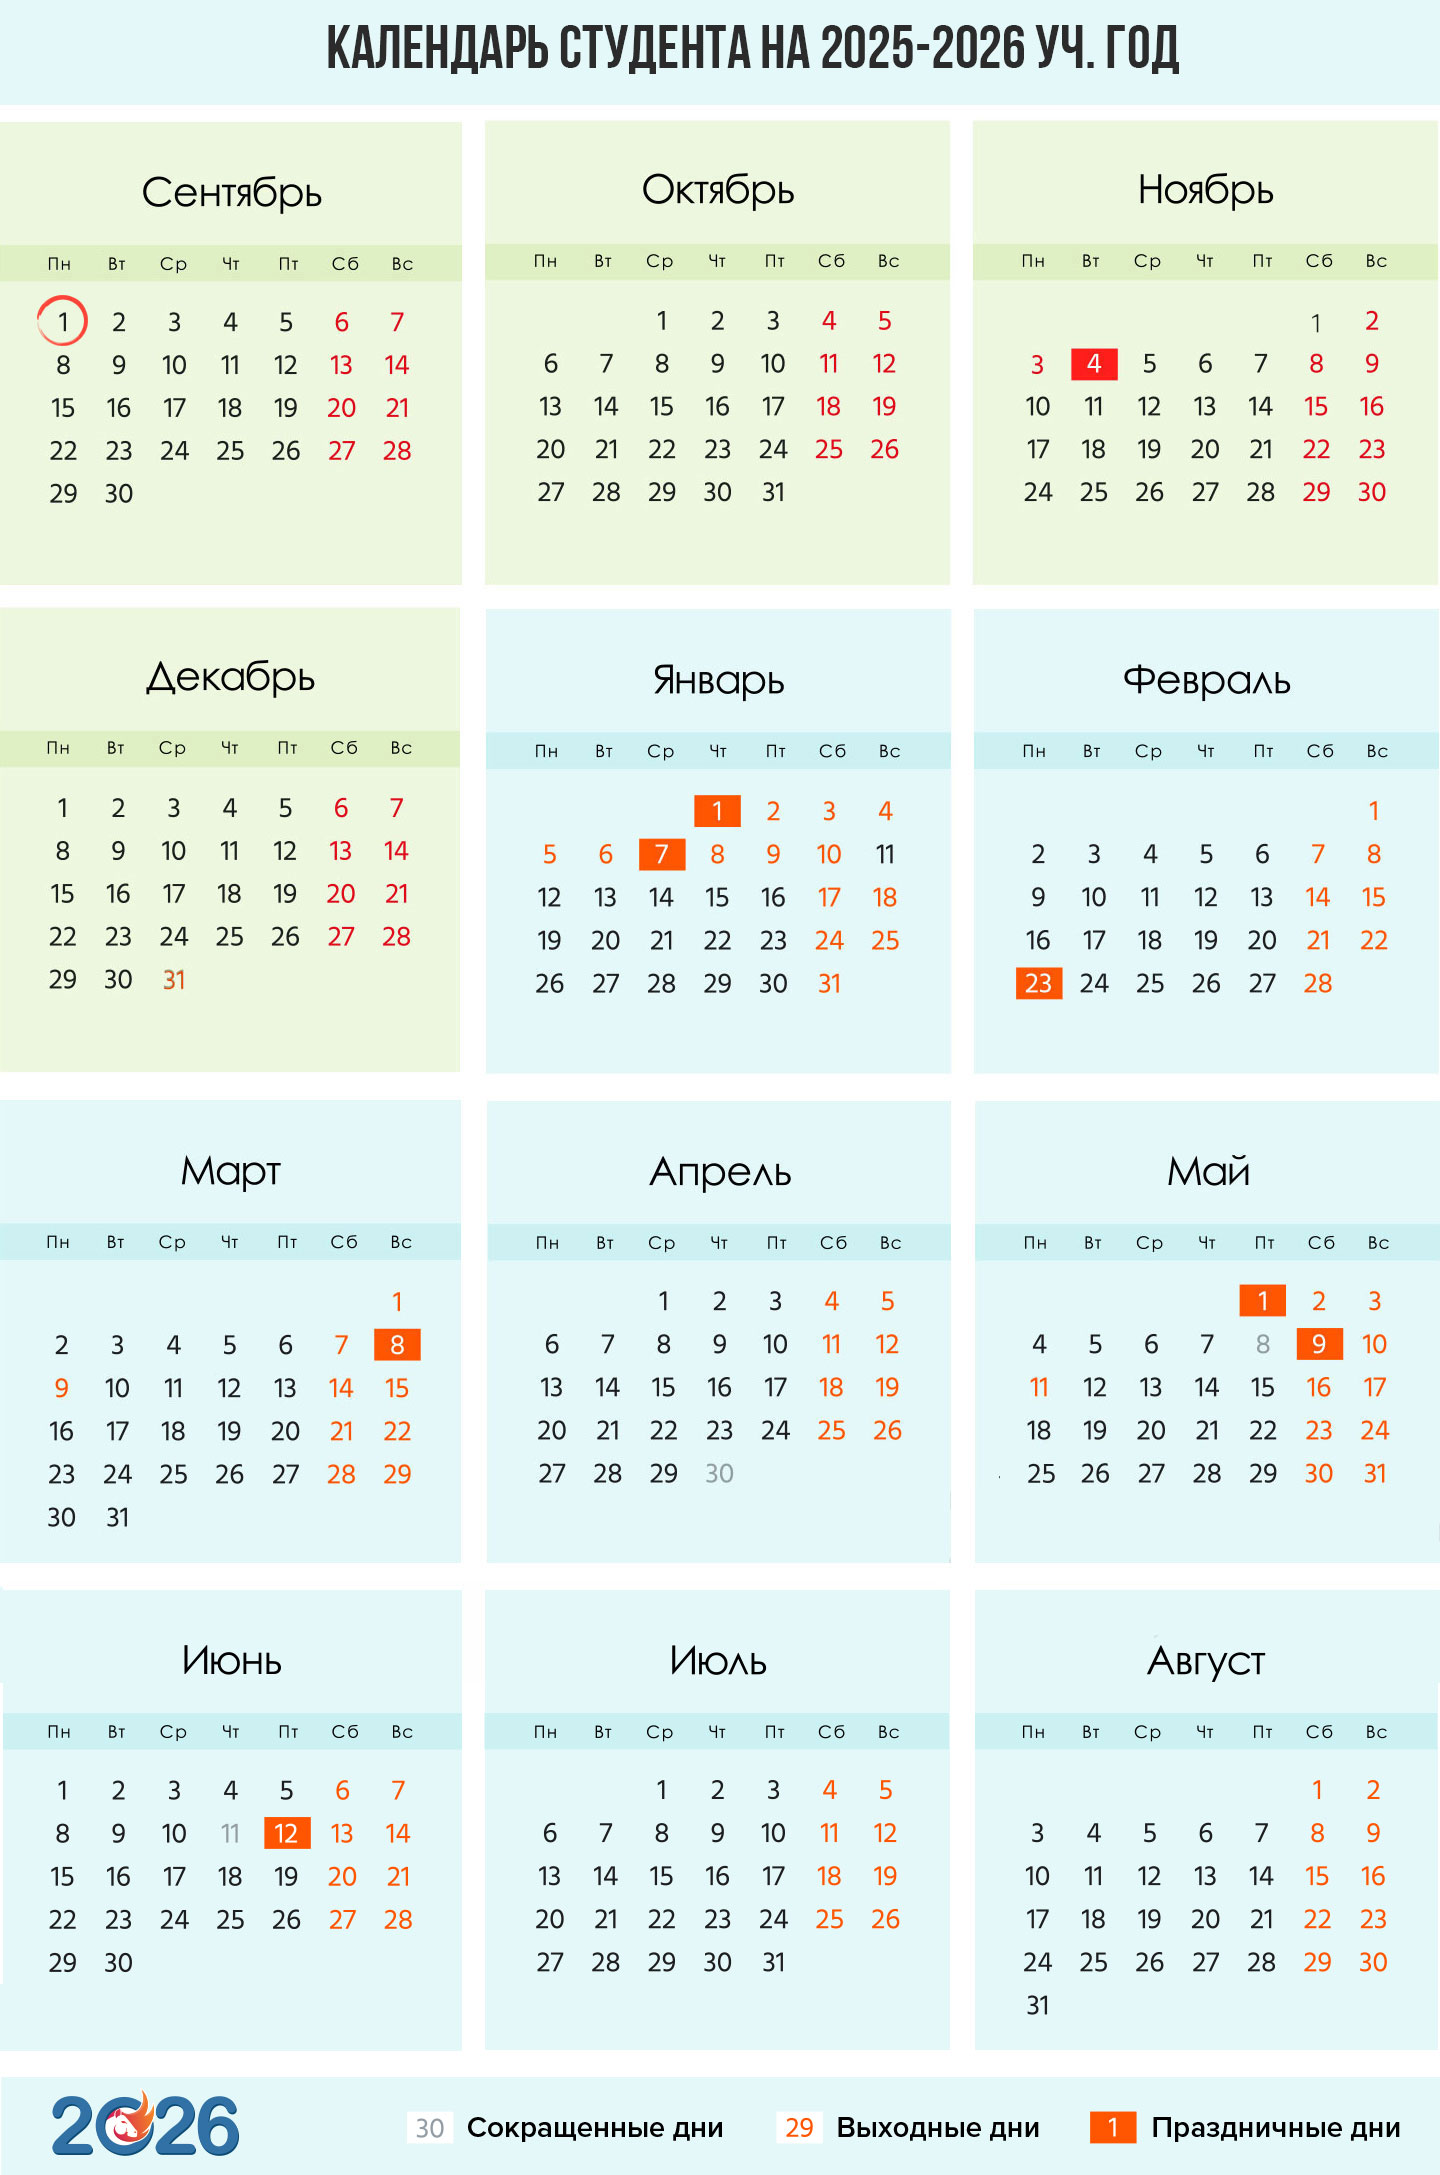 Учебный календарь студента 2025-2026 года